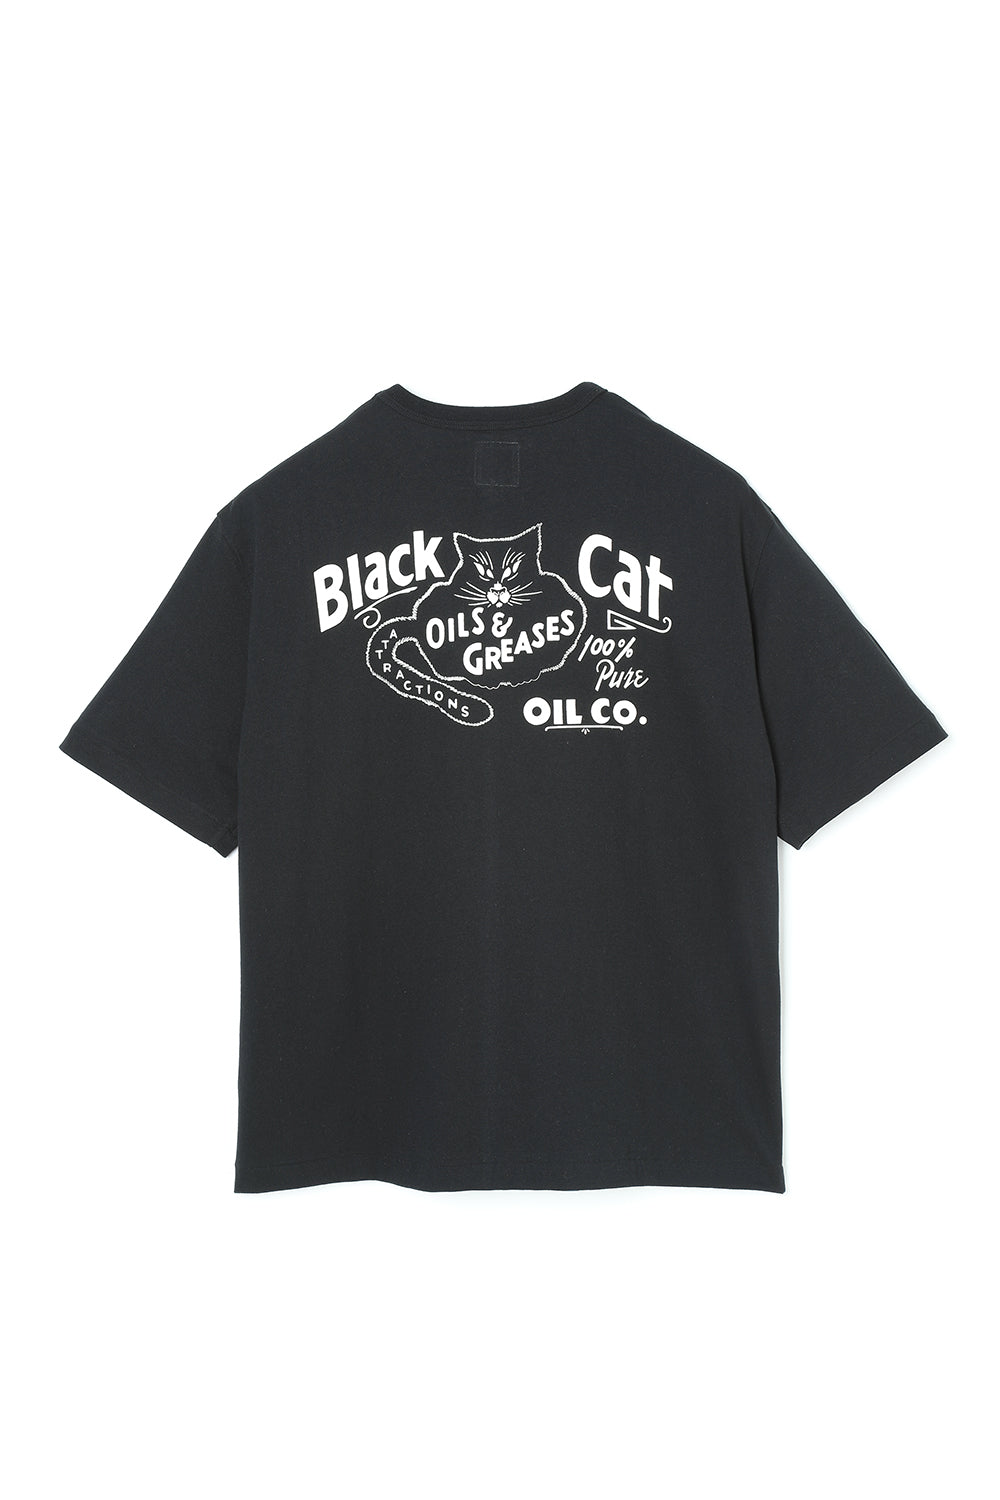 AM0001 Black Cat Back Print Pocket Tee -Black-